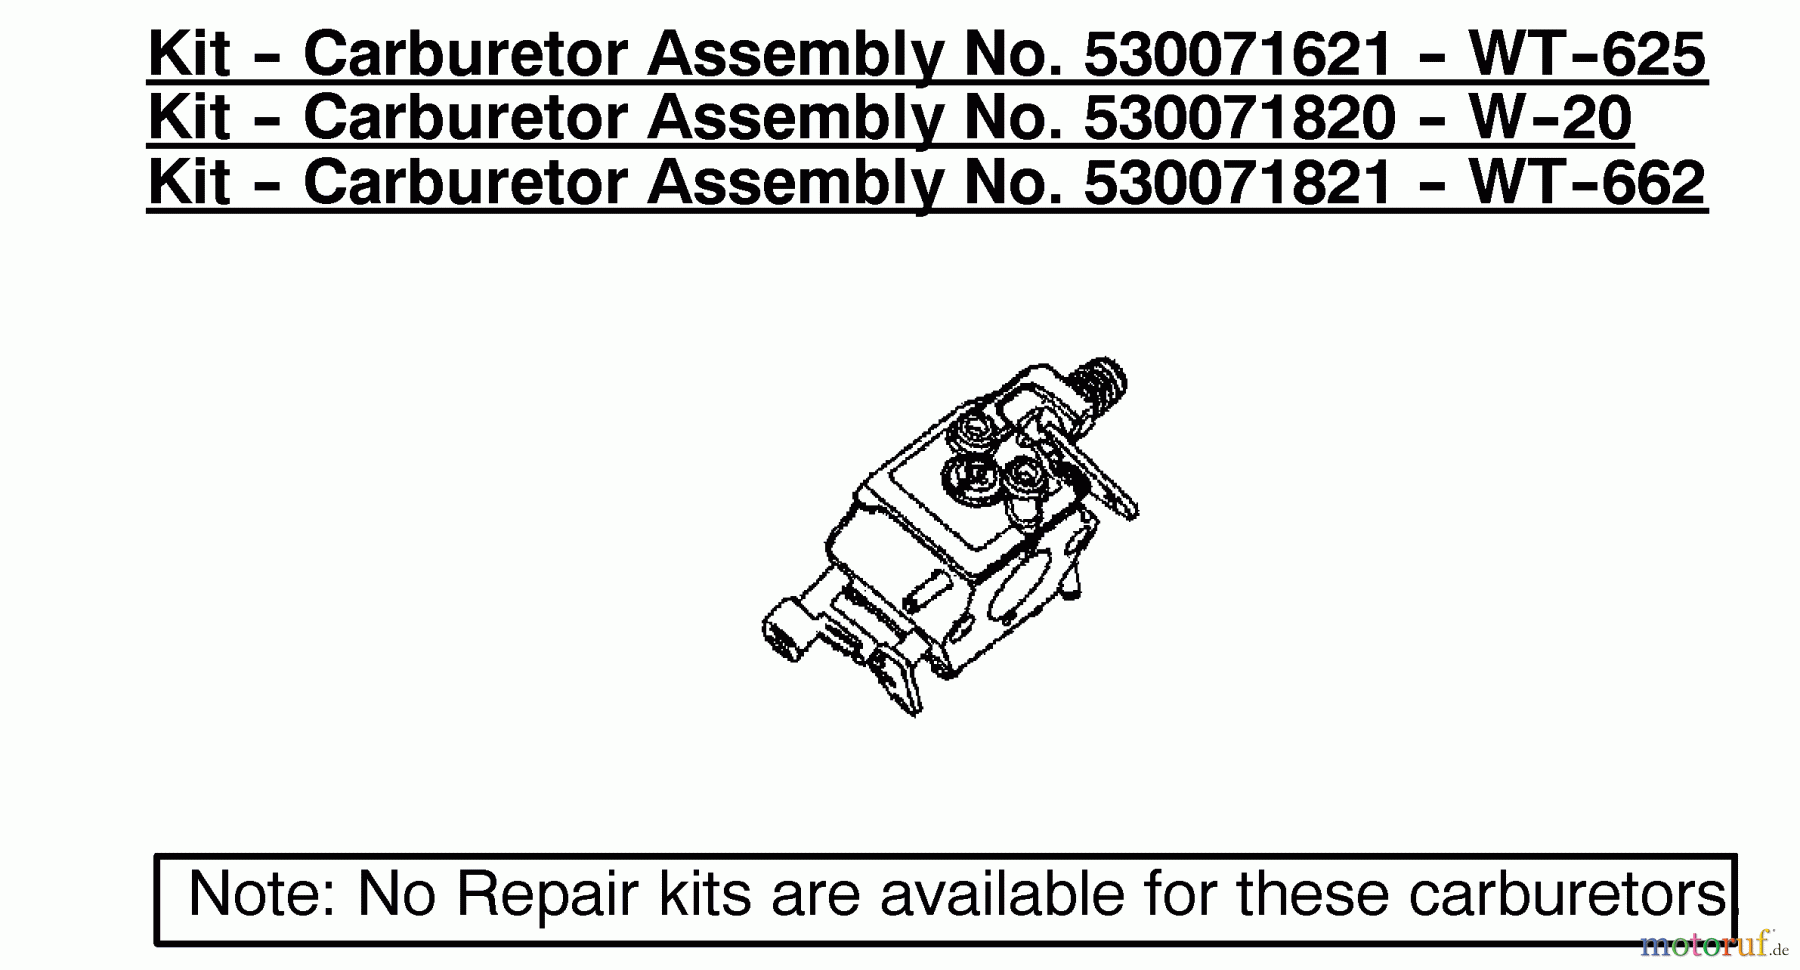  Poulan / Weed Eater Motorsägen 2250 (Type 6) - Poulan Woodmaster Chainsaw Kit - Carburetor Assembly 530071621/530071820/530071821